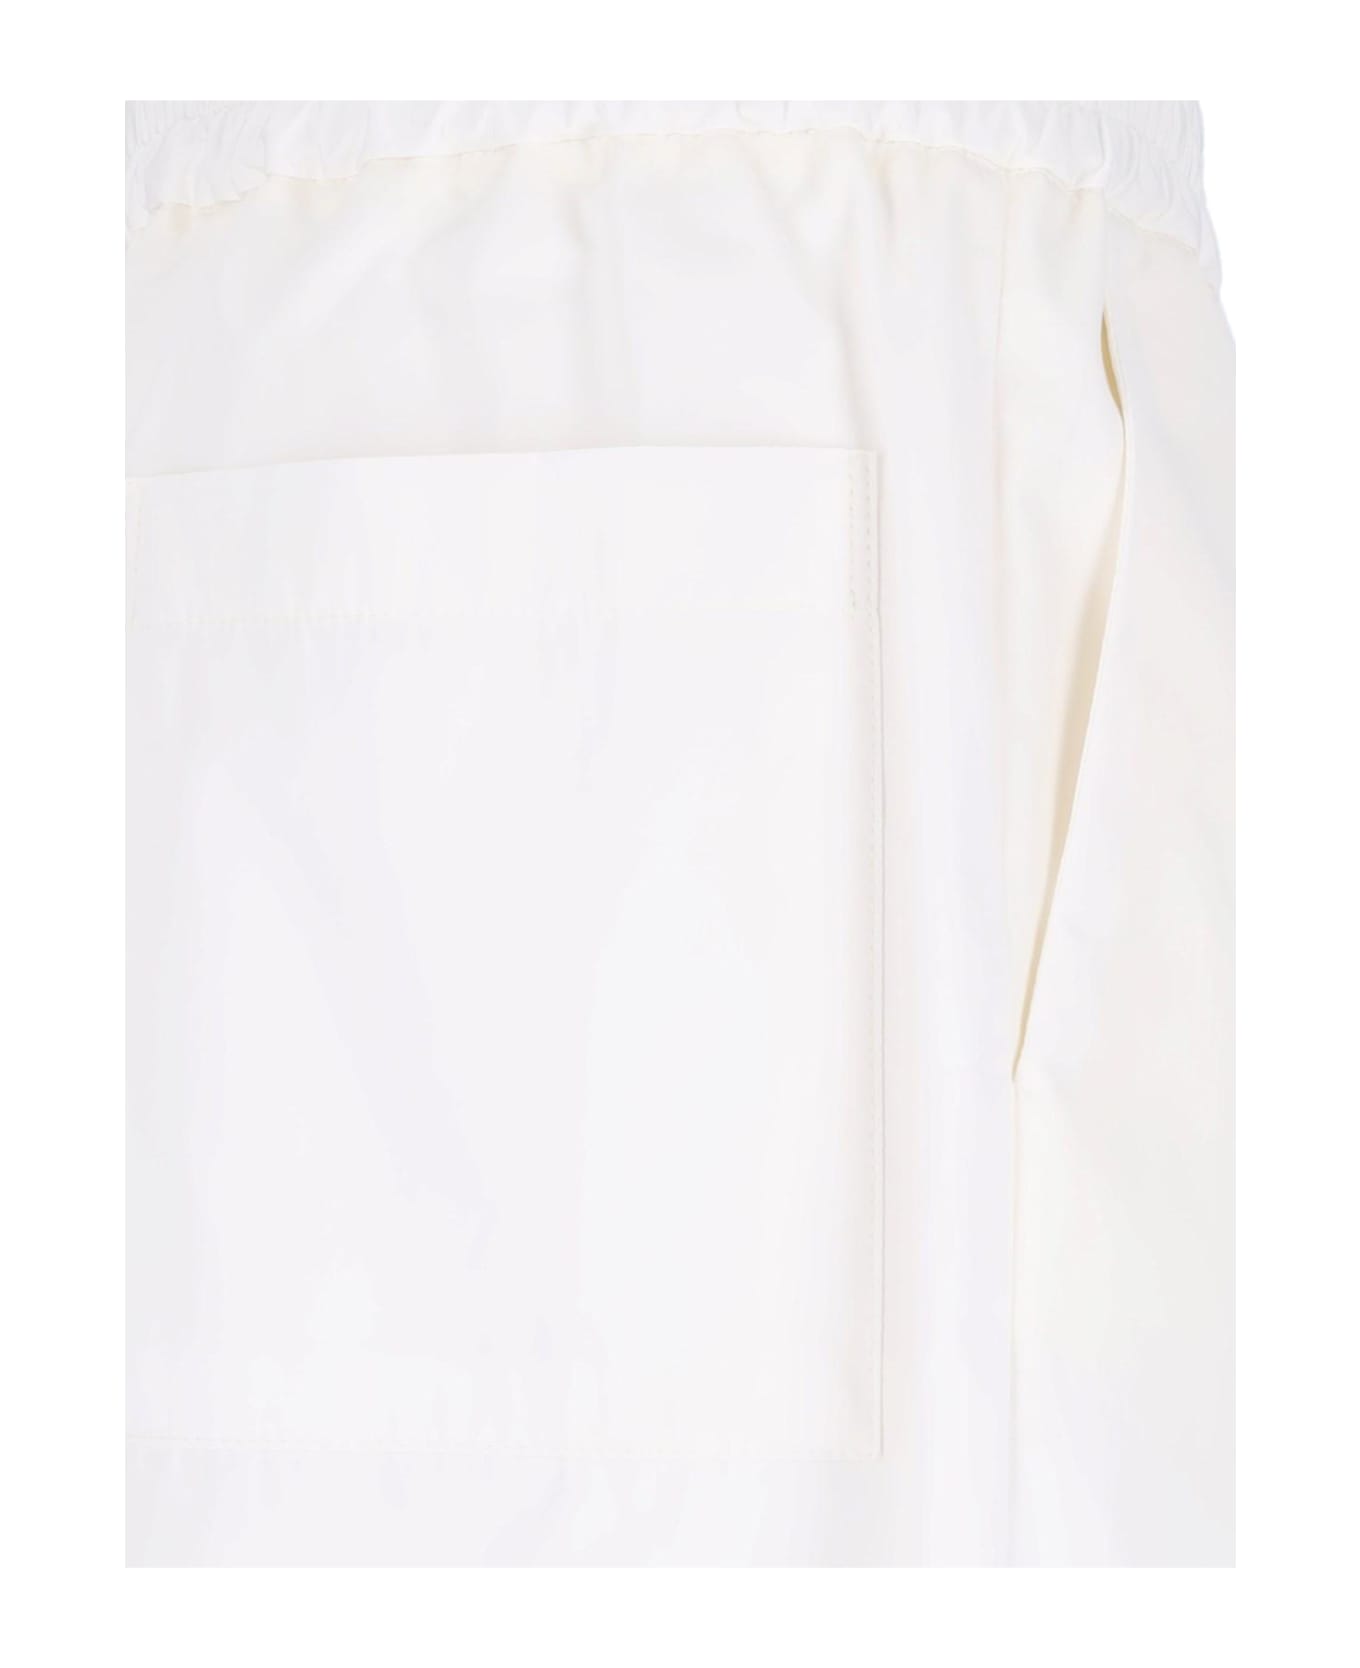 Lardini Wide Pants - White